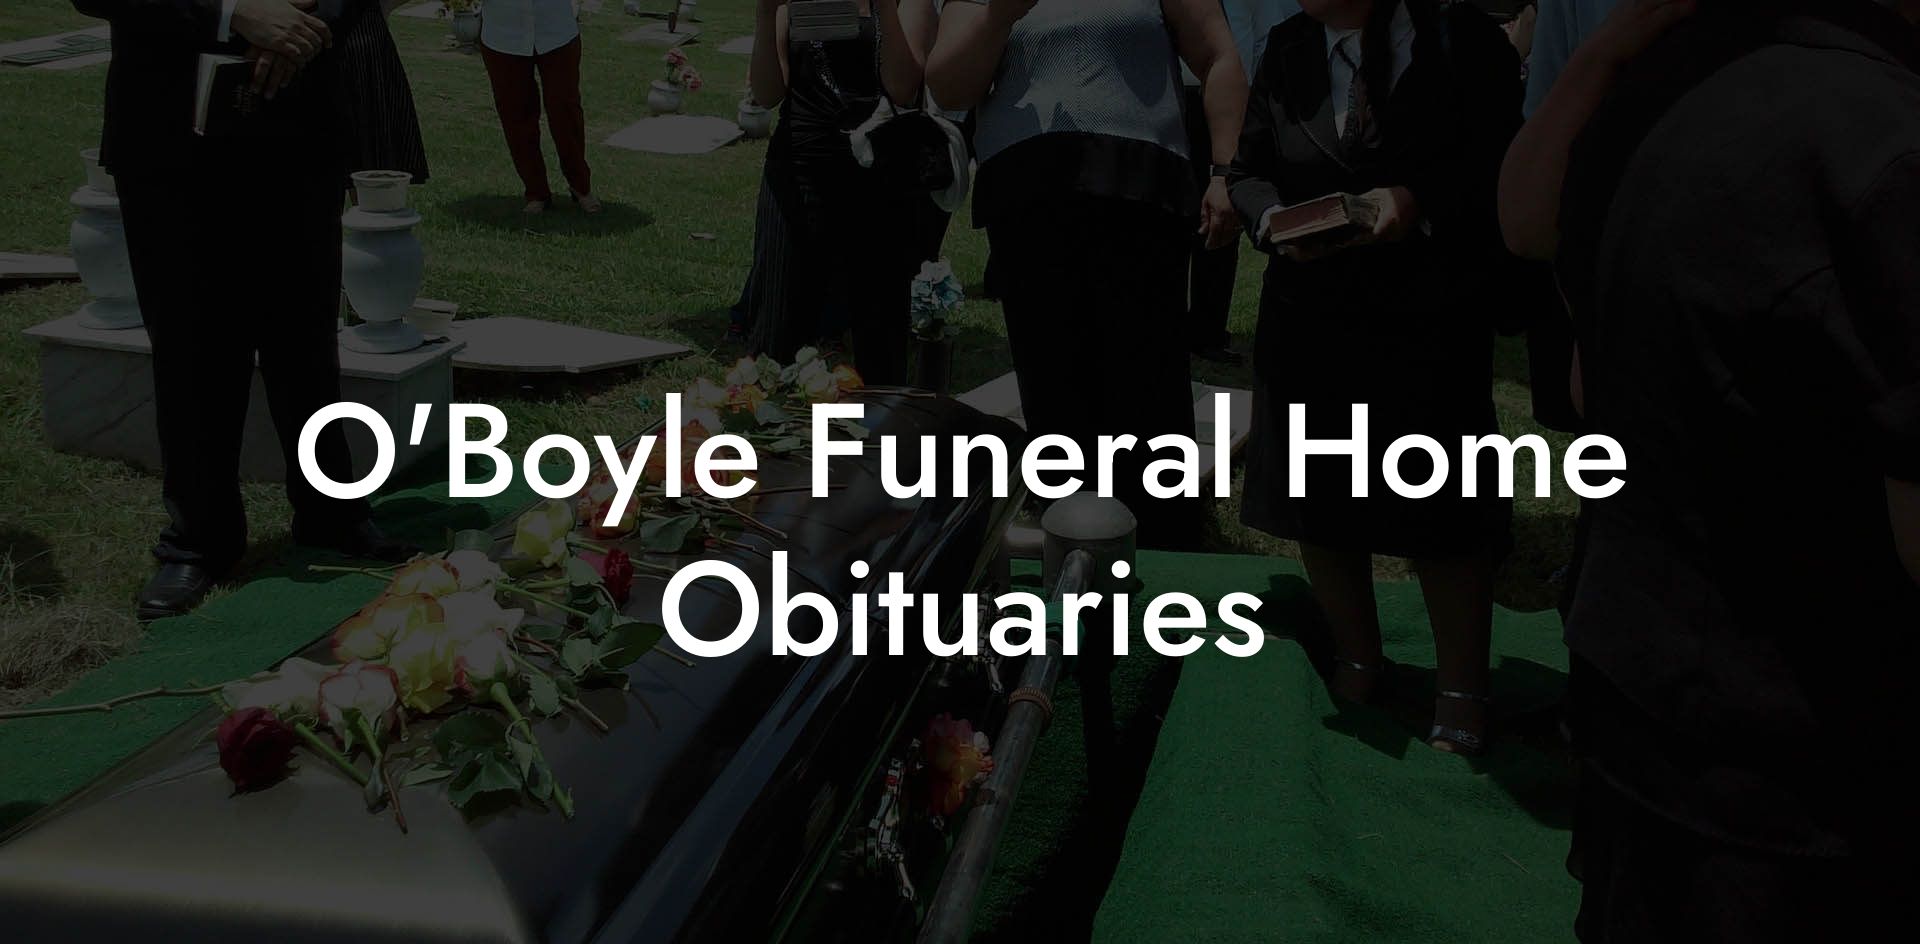 O'Boyle Funeral Home Obituaries